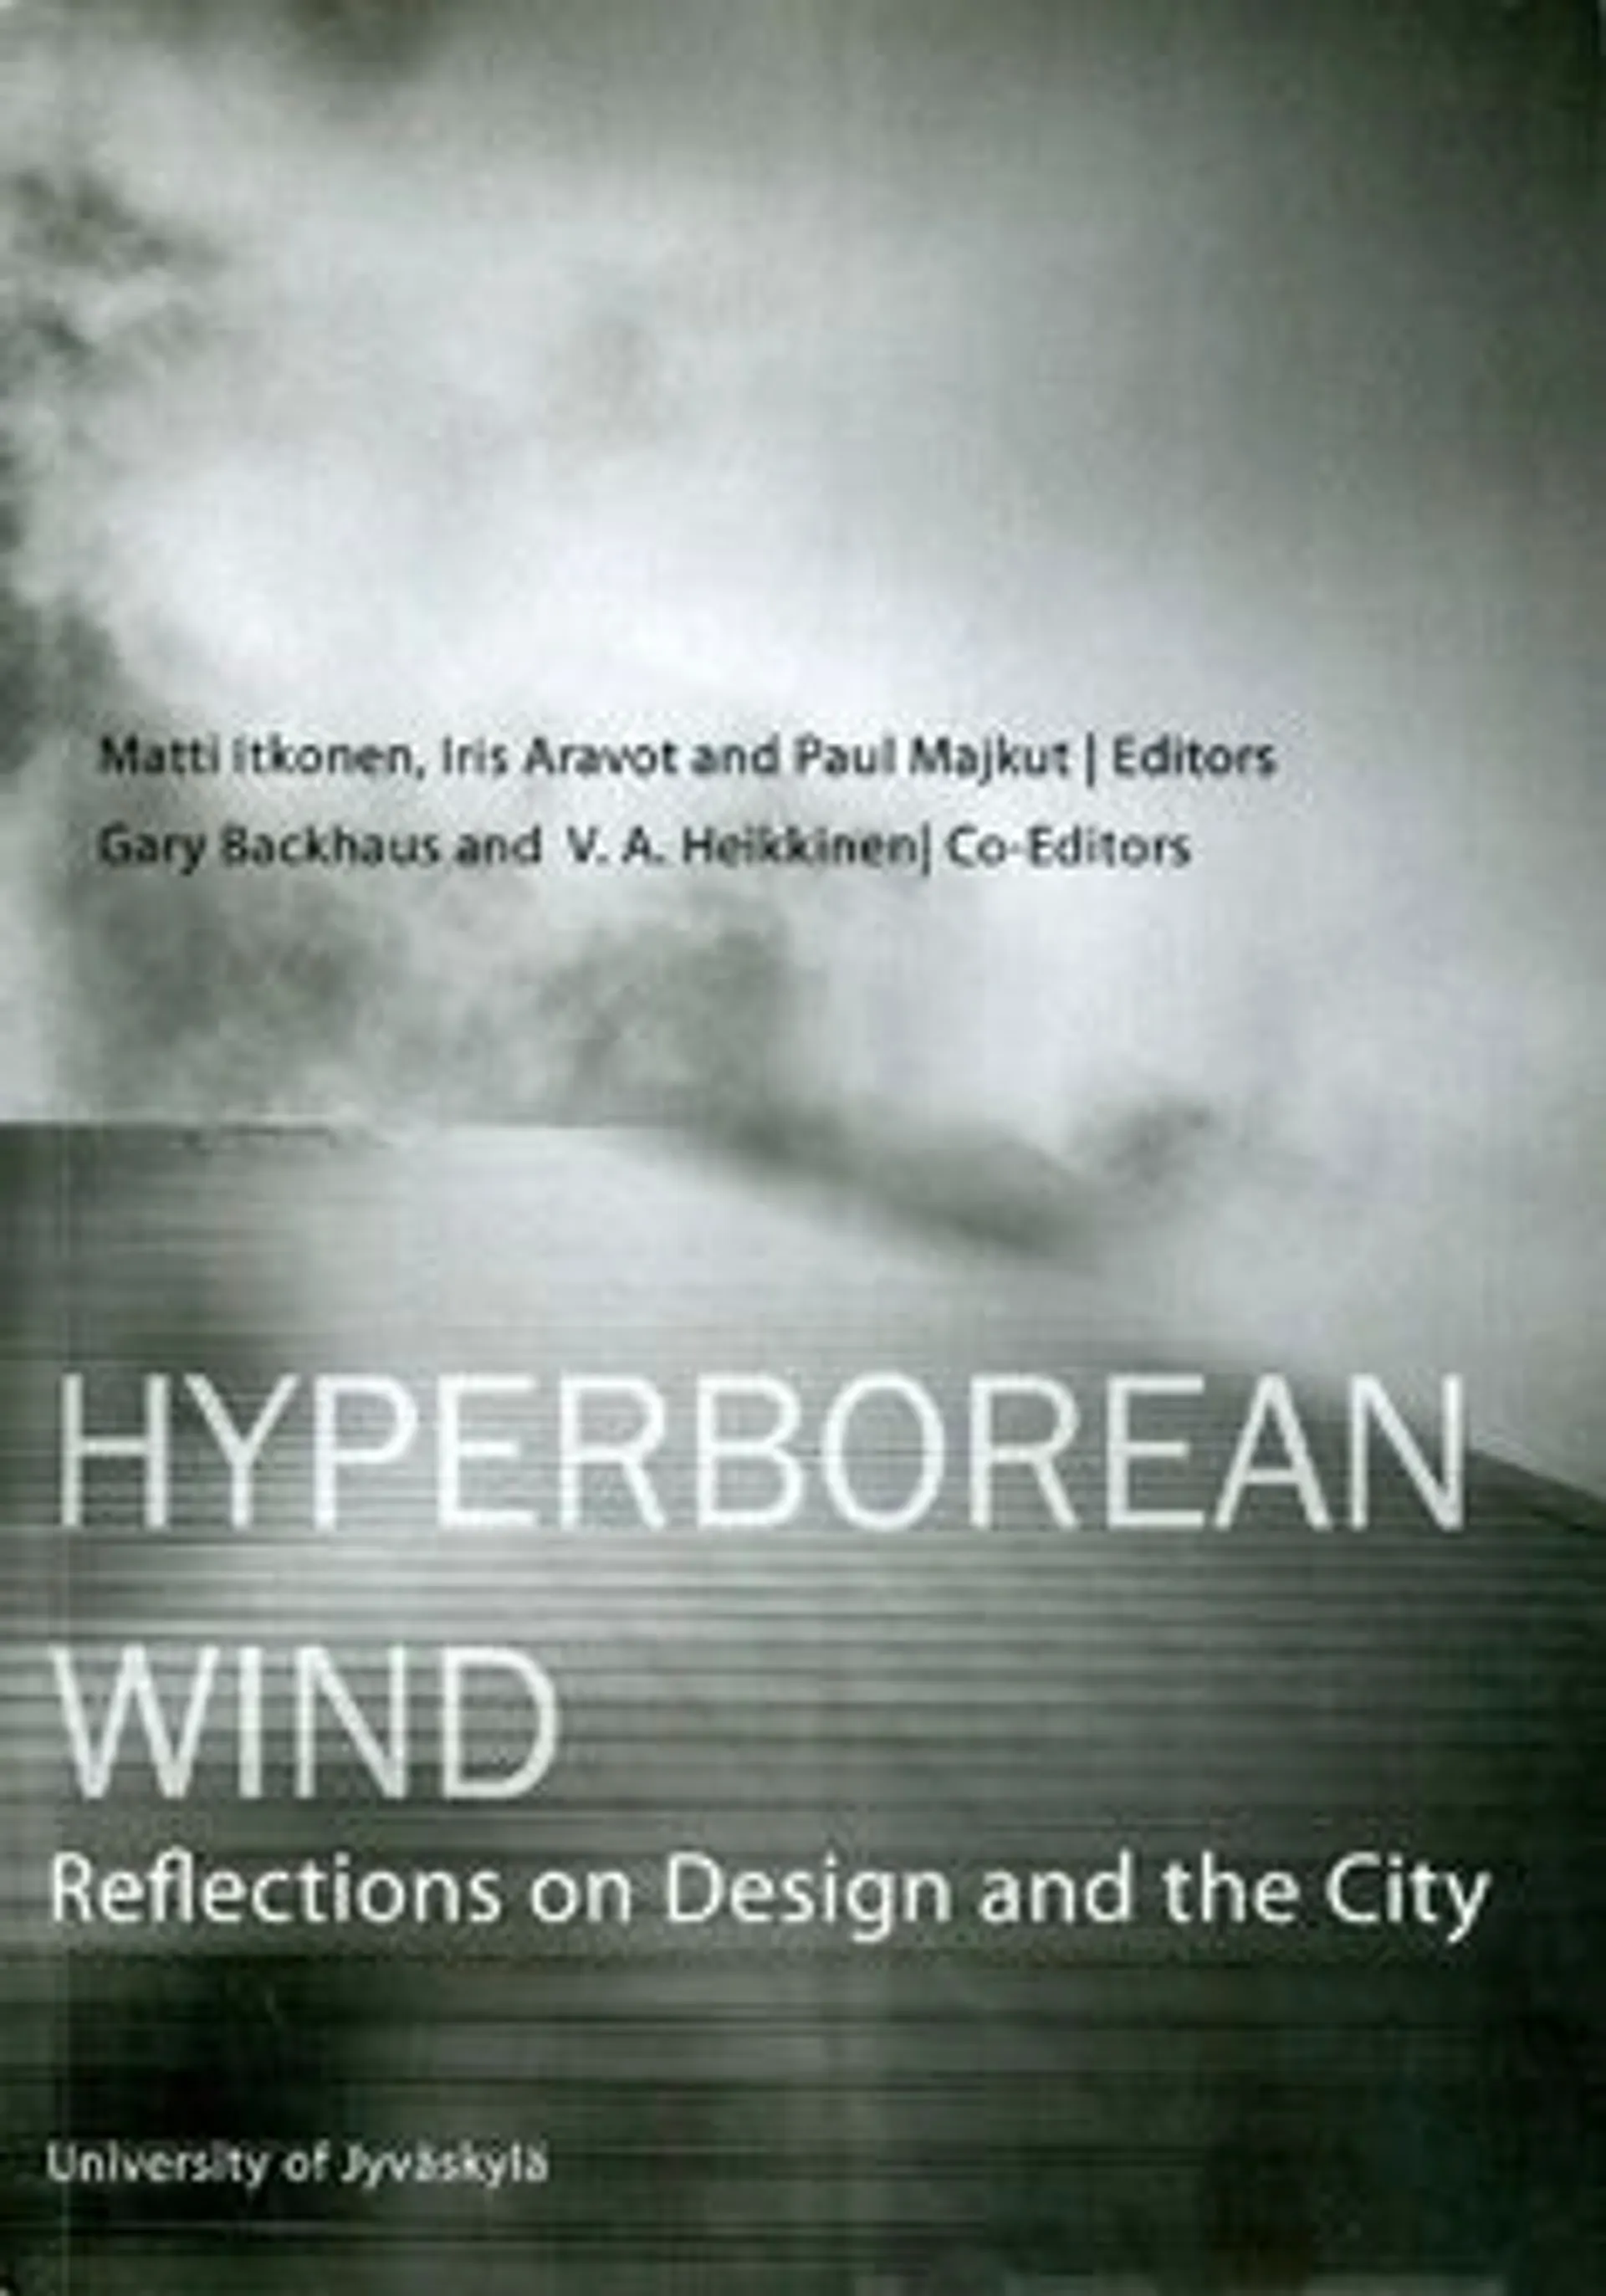 Hyperborean wind